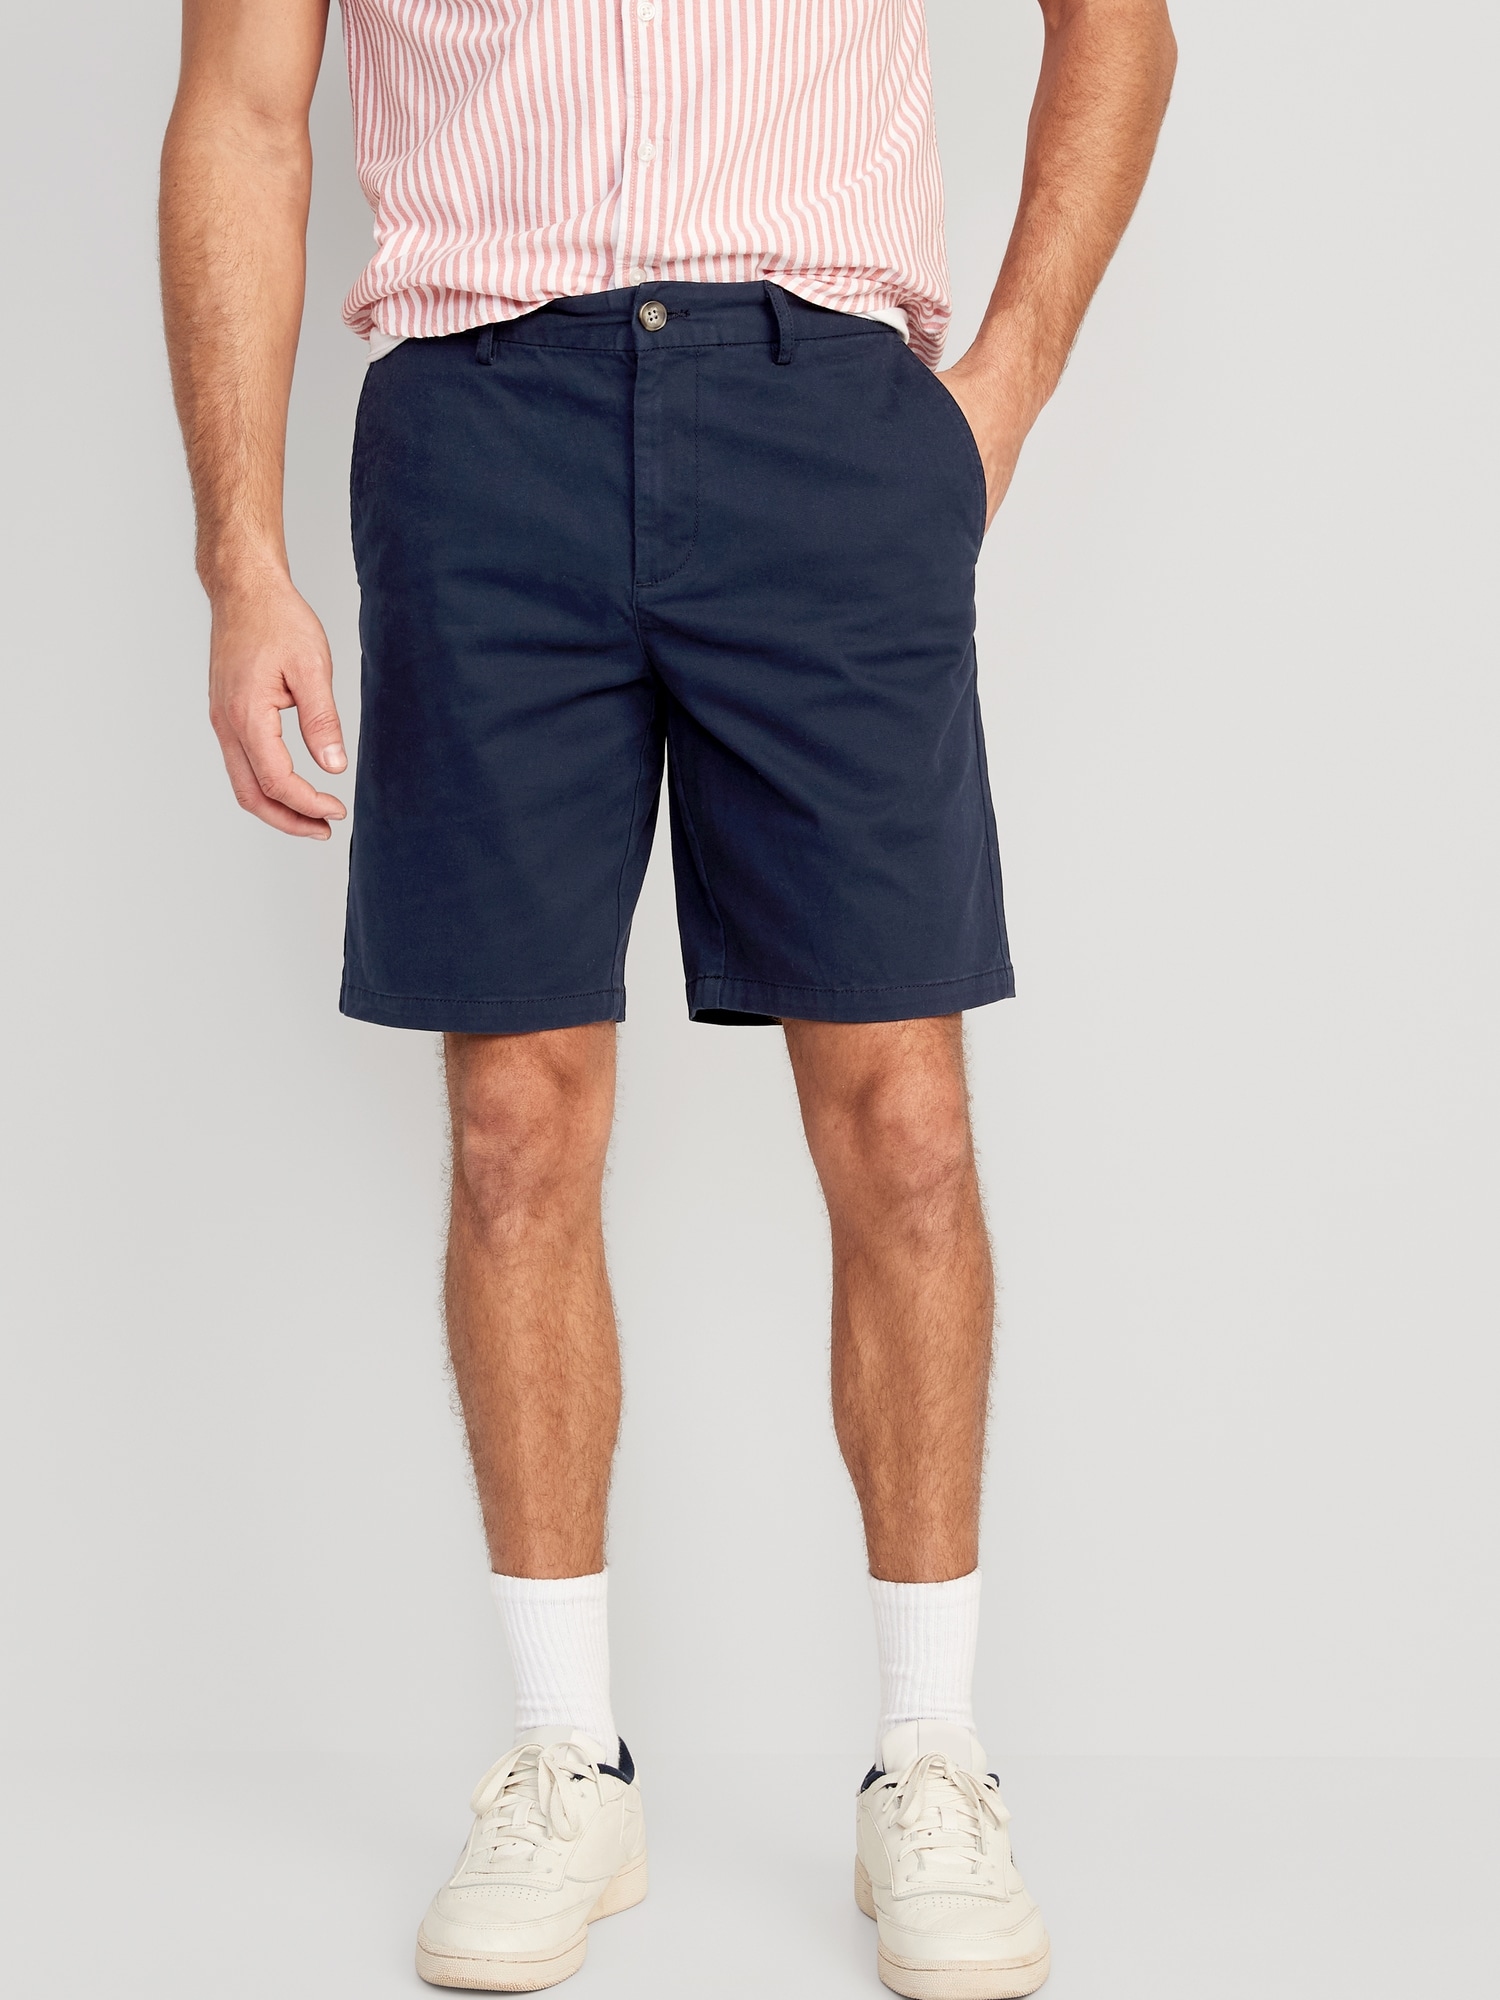 Old Navy Slim Built-In Flex Rotation Chino Shorts for Men -- 9-inch inseam blue. 1